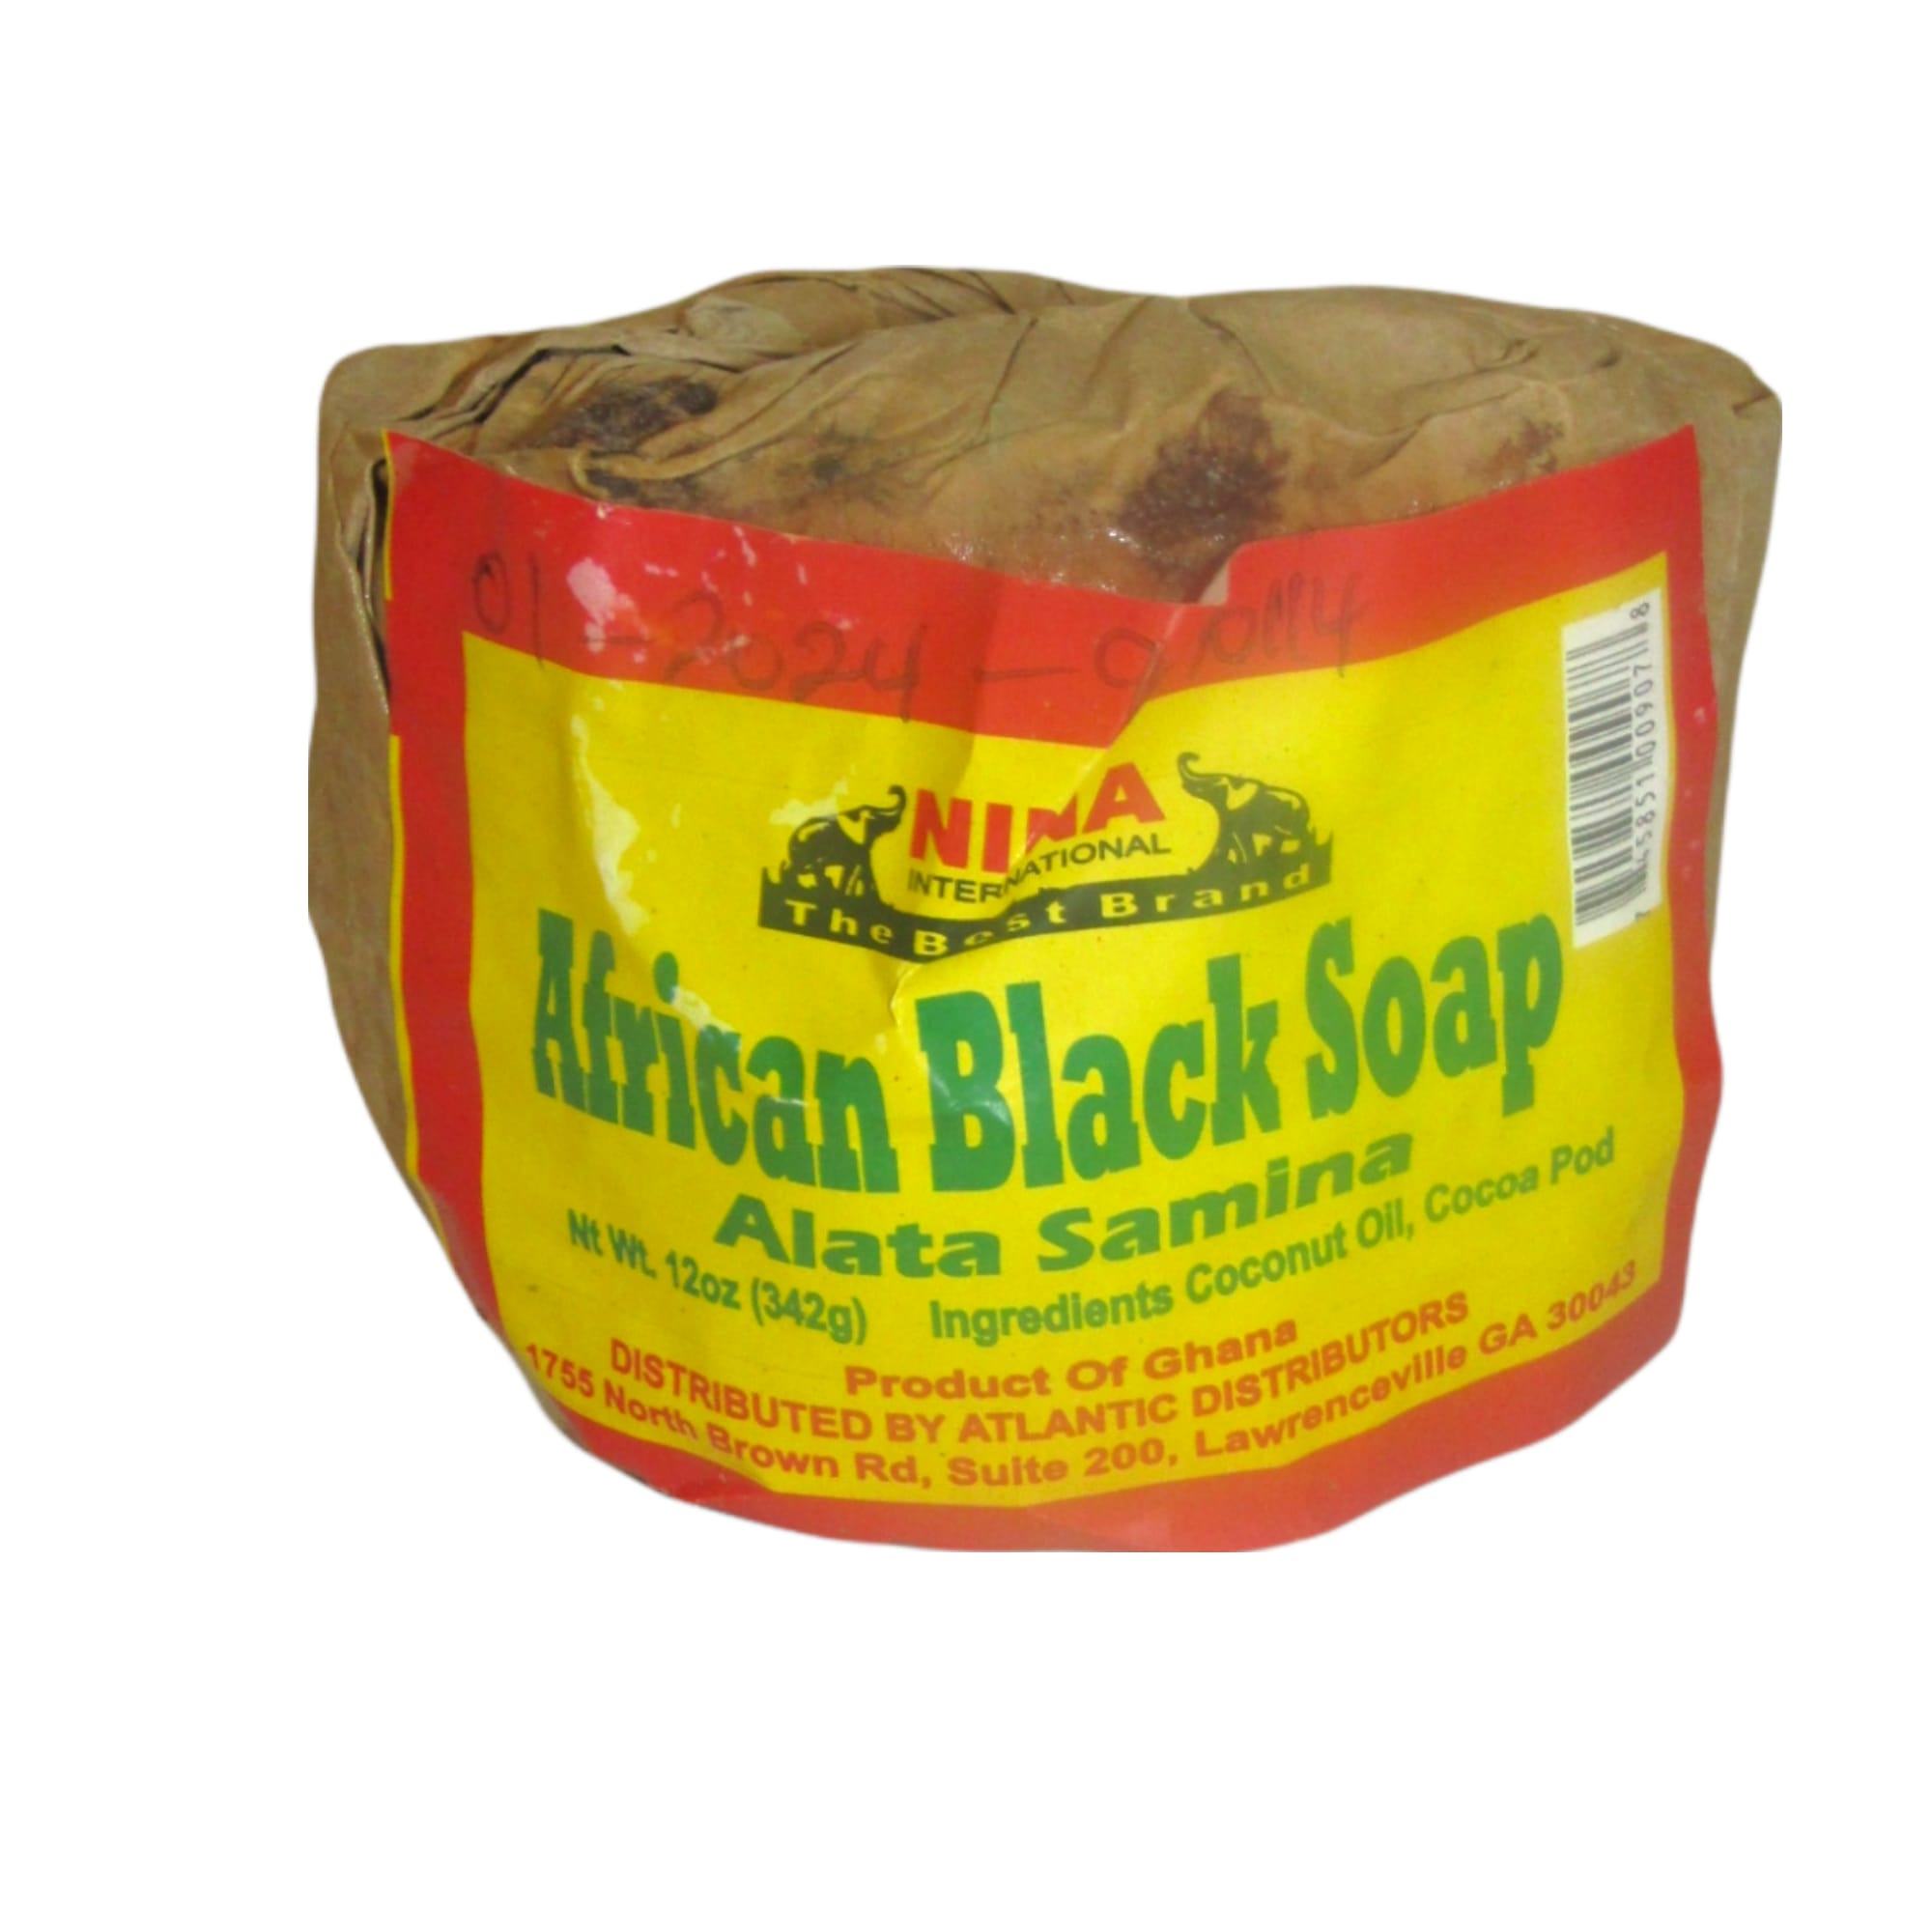 African black soap 12 oz